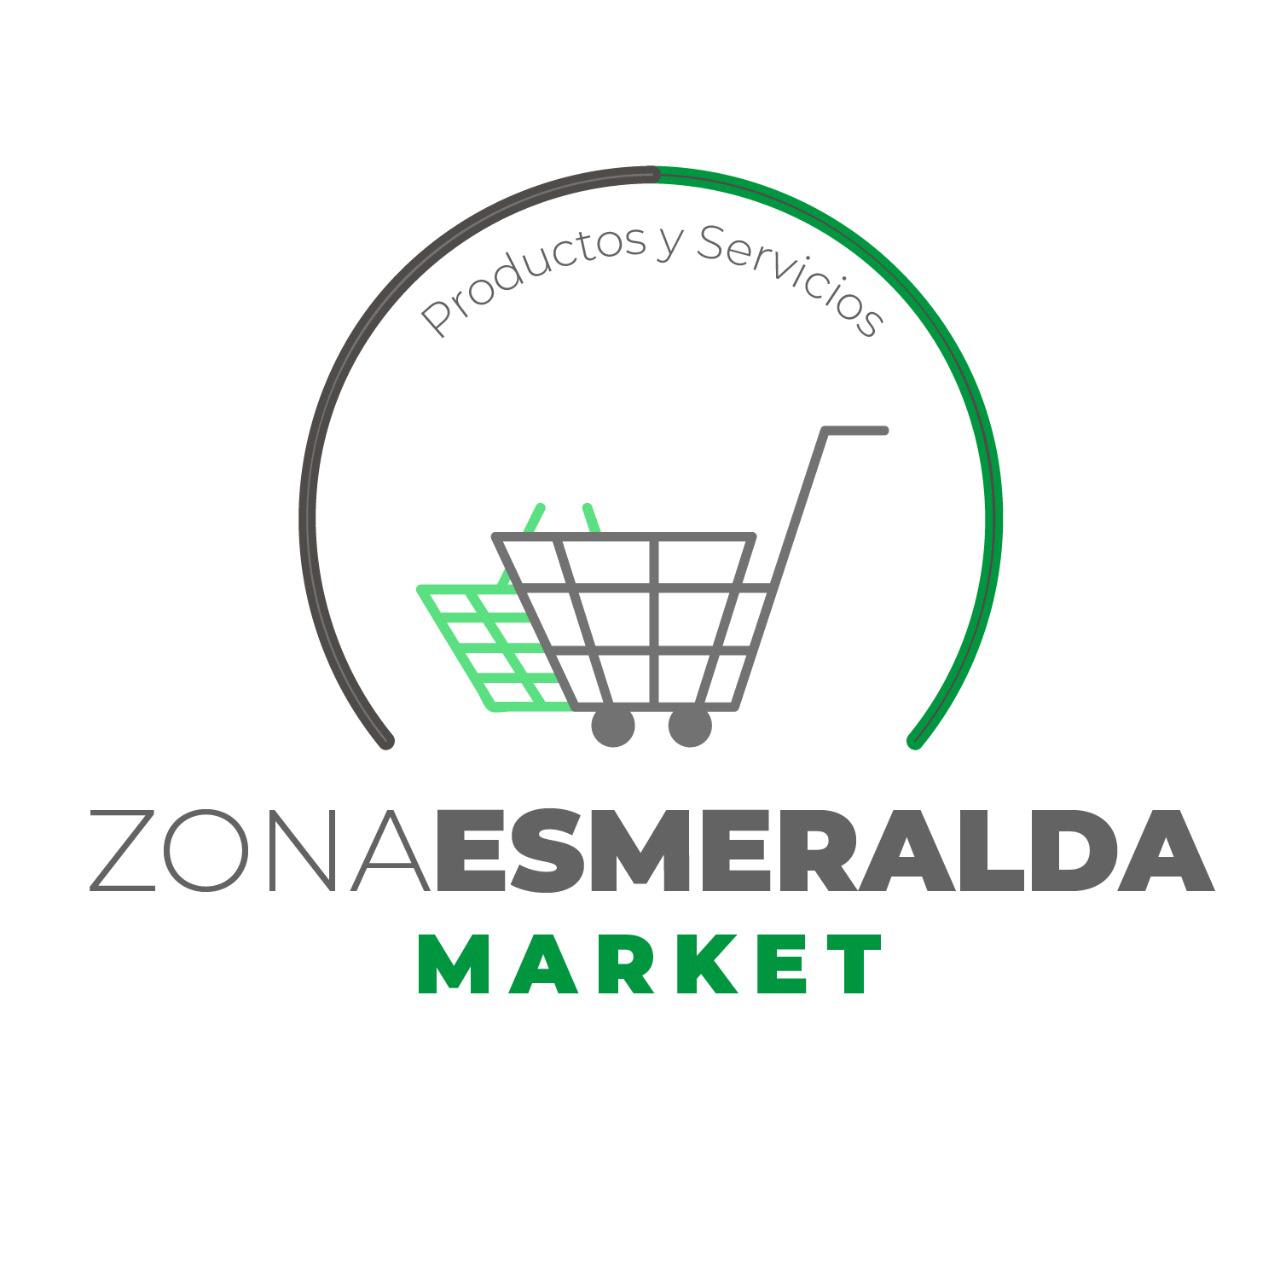 Zona Esmeralda Market